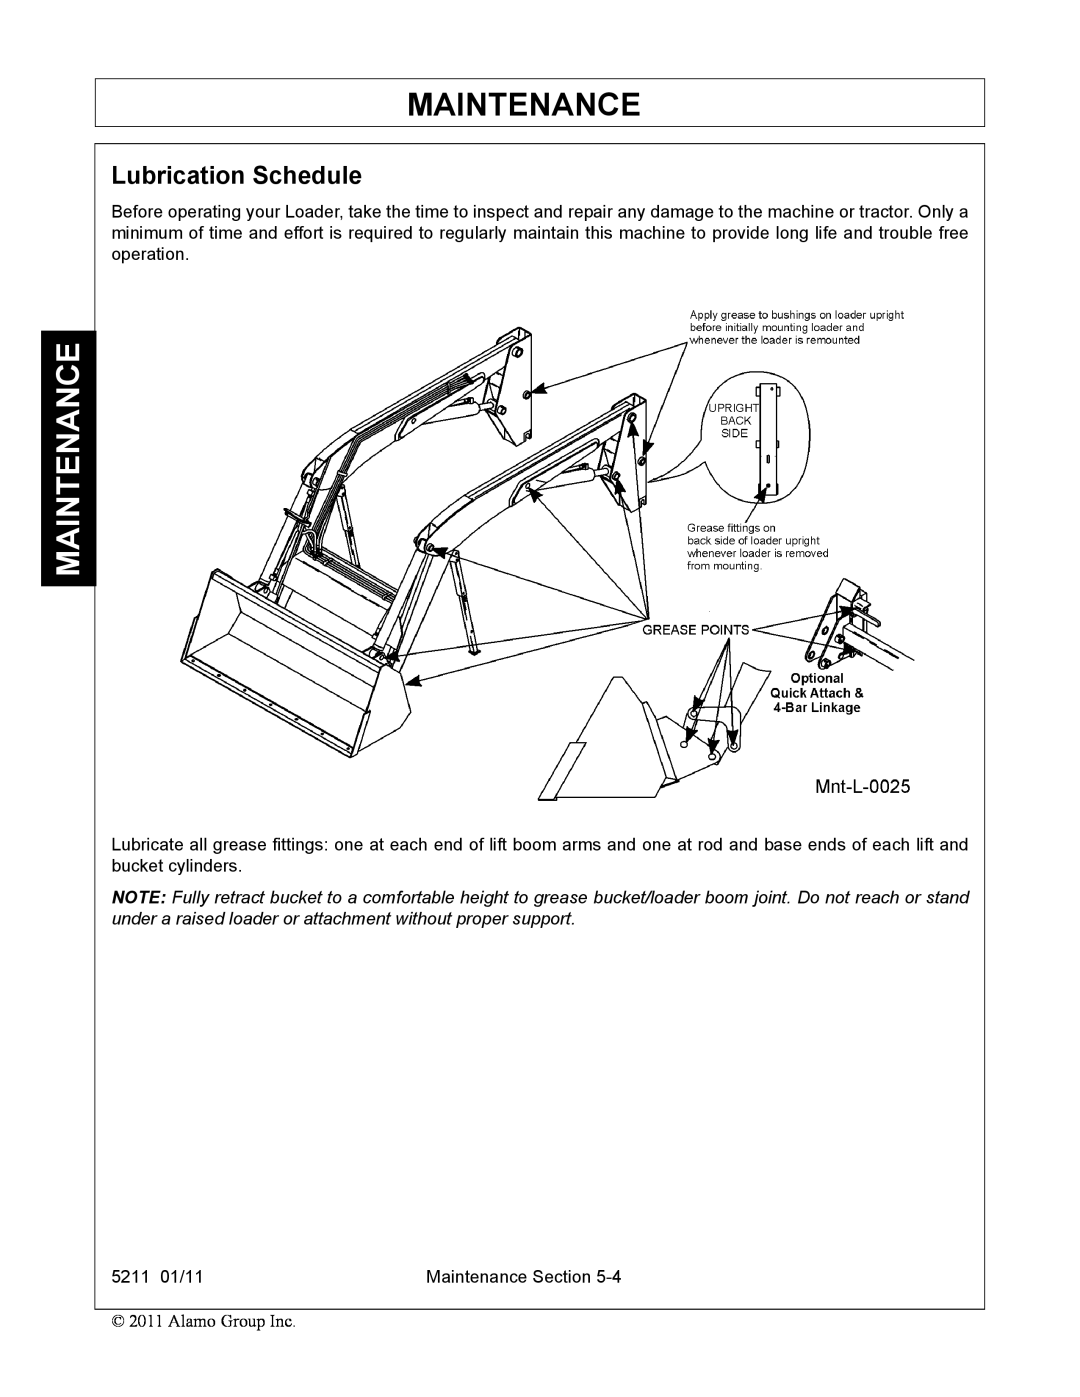 Servis-Rhino 5211 manual Maintenance, Lubrication Schedule 